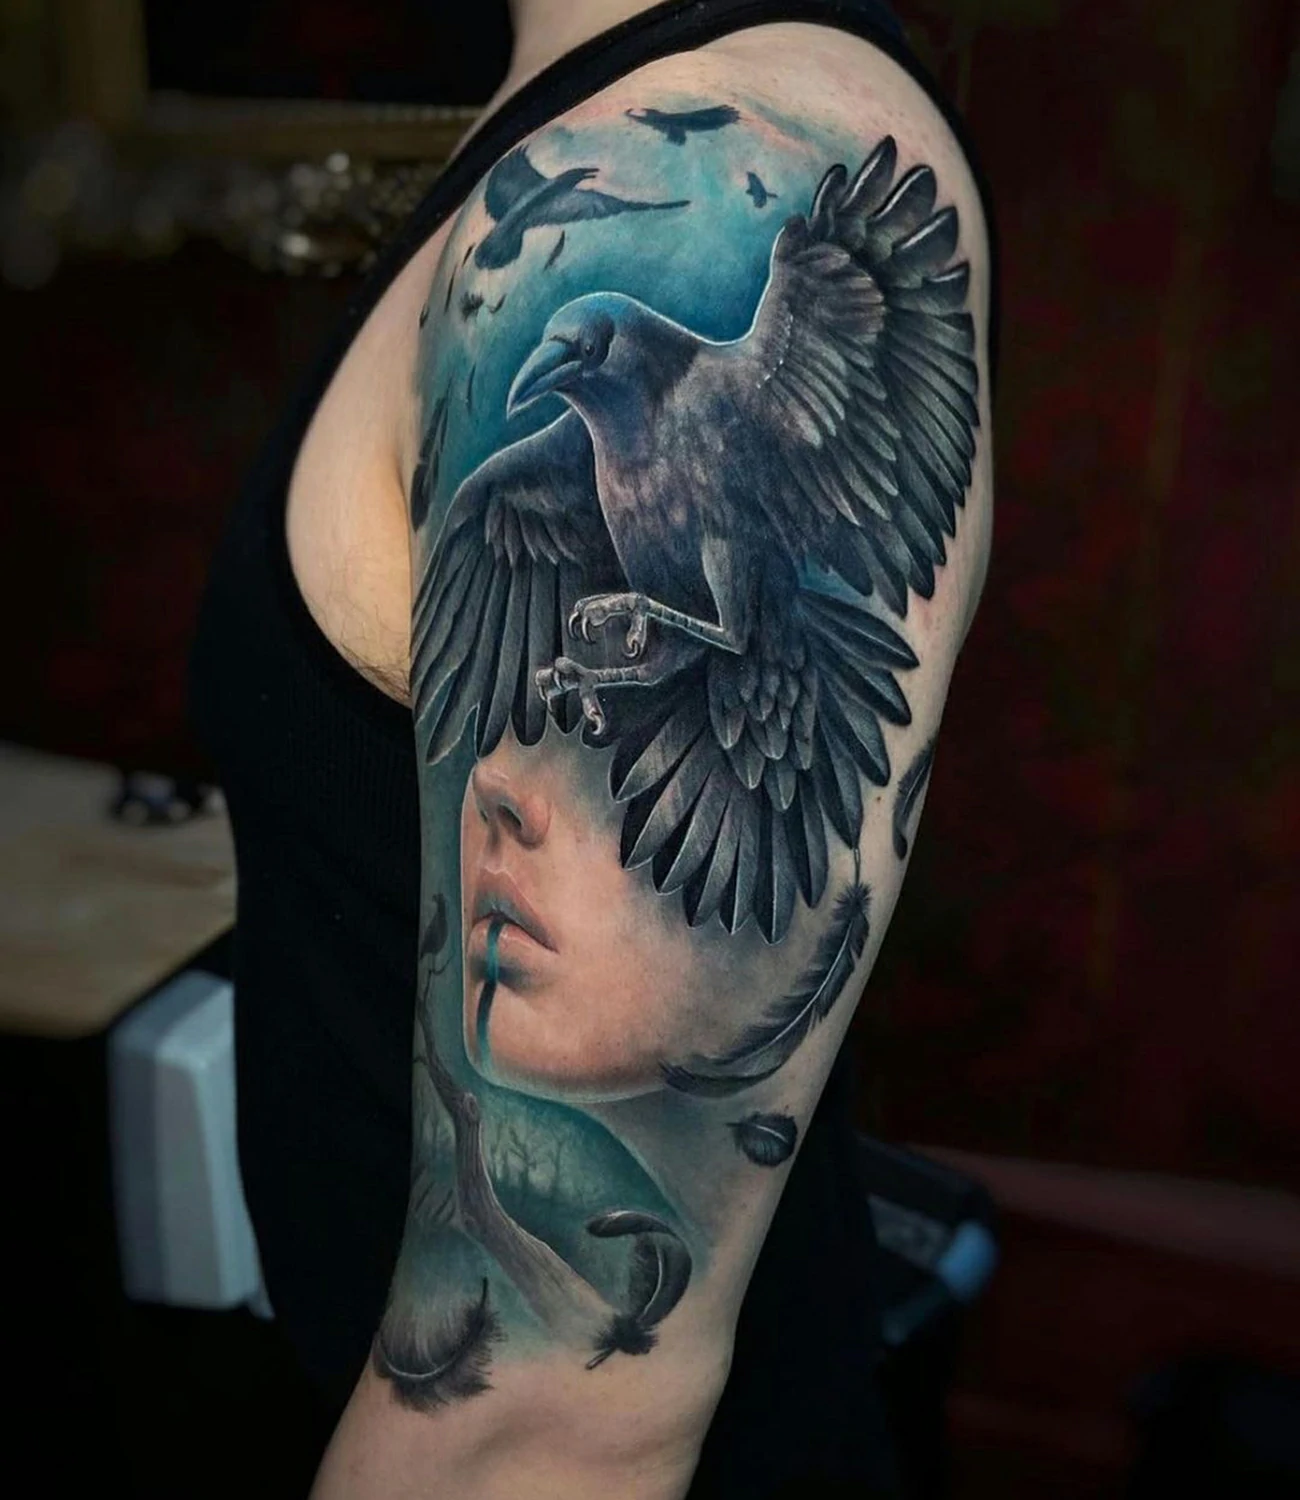 Raven shoulder tattoo: A raven tattoo designed to wrap around the shoulder.